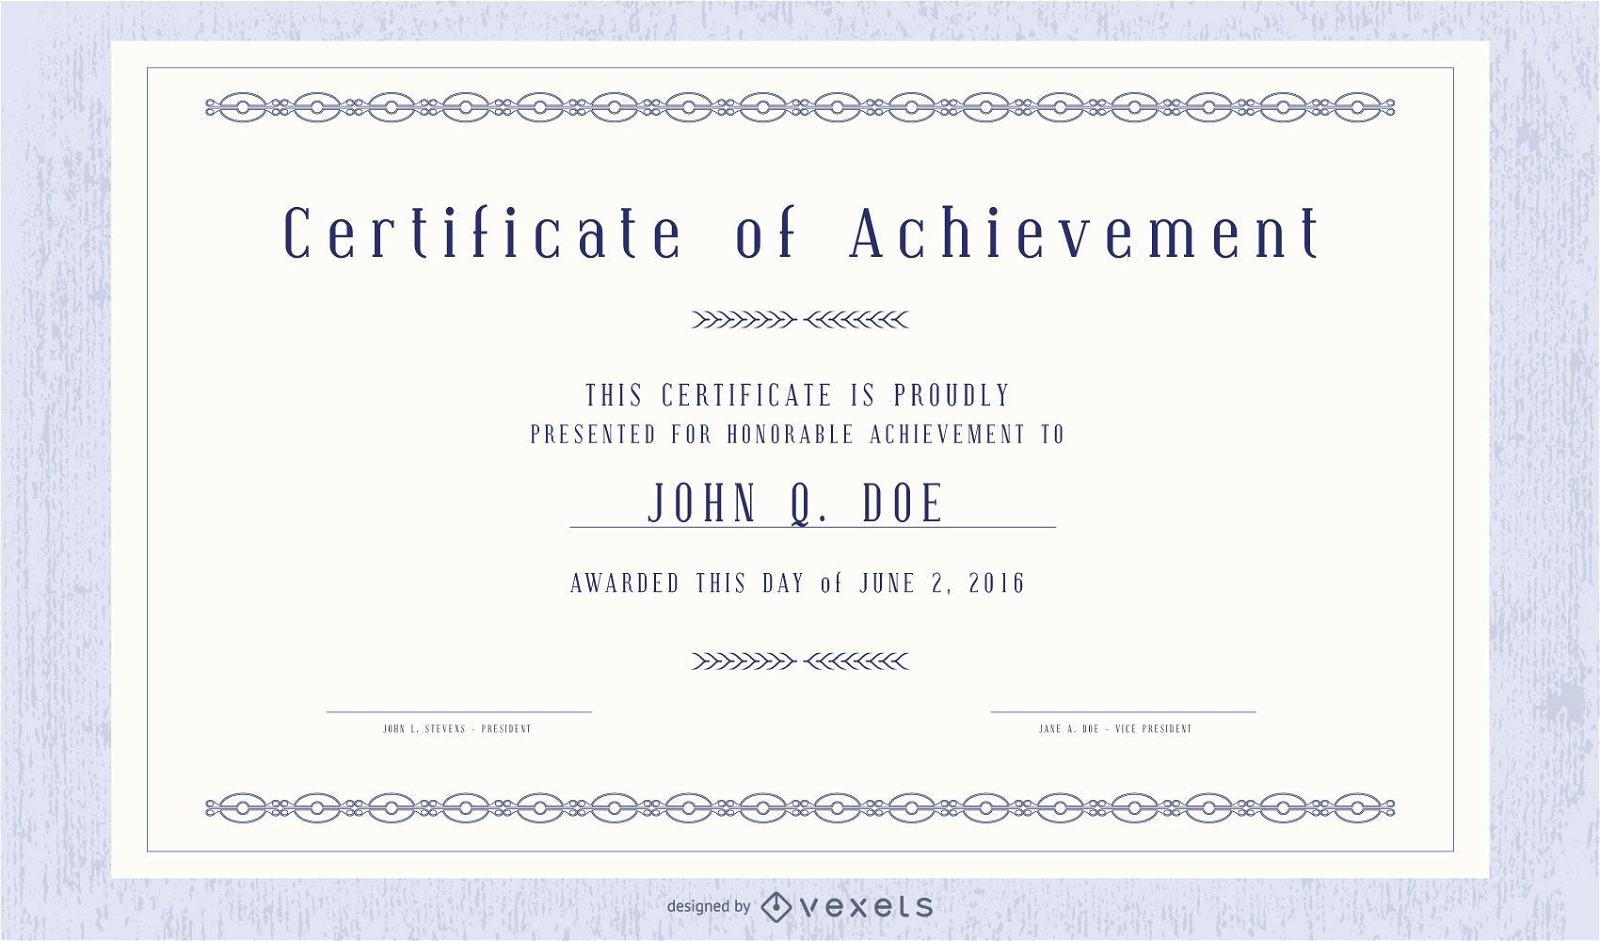 Decorative Certificate & Credential Template Pack